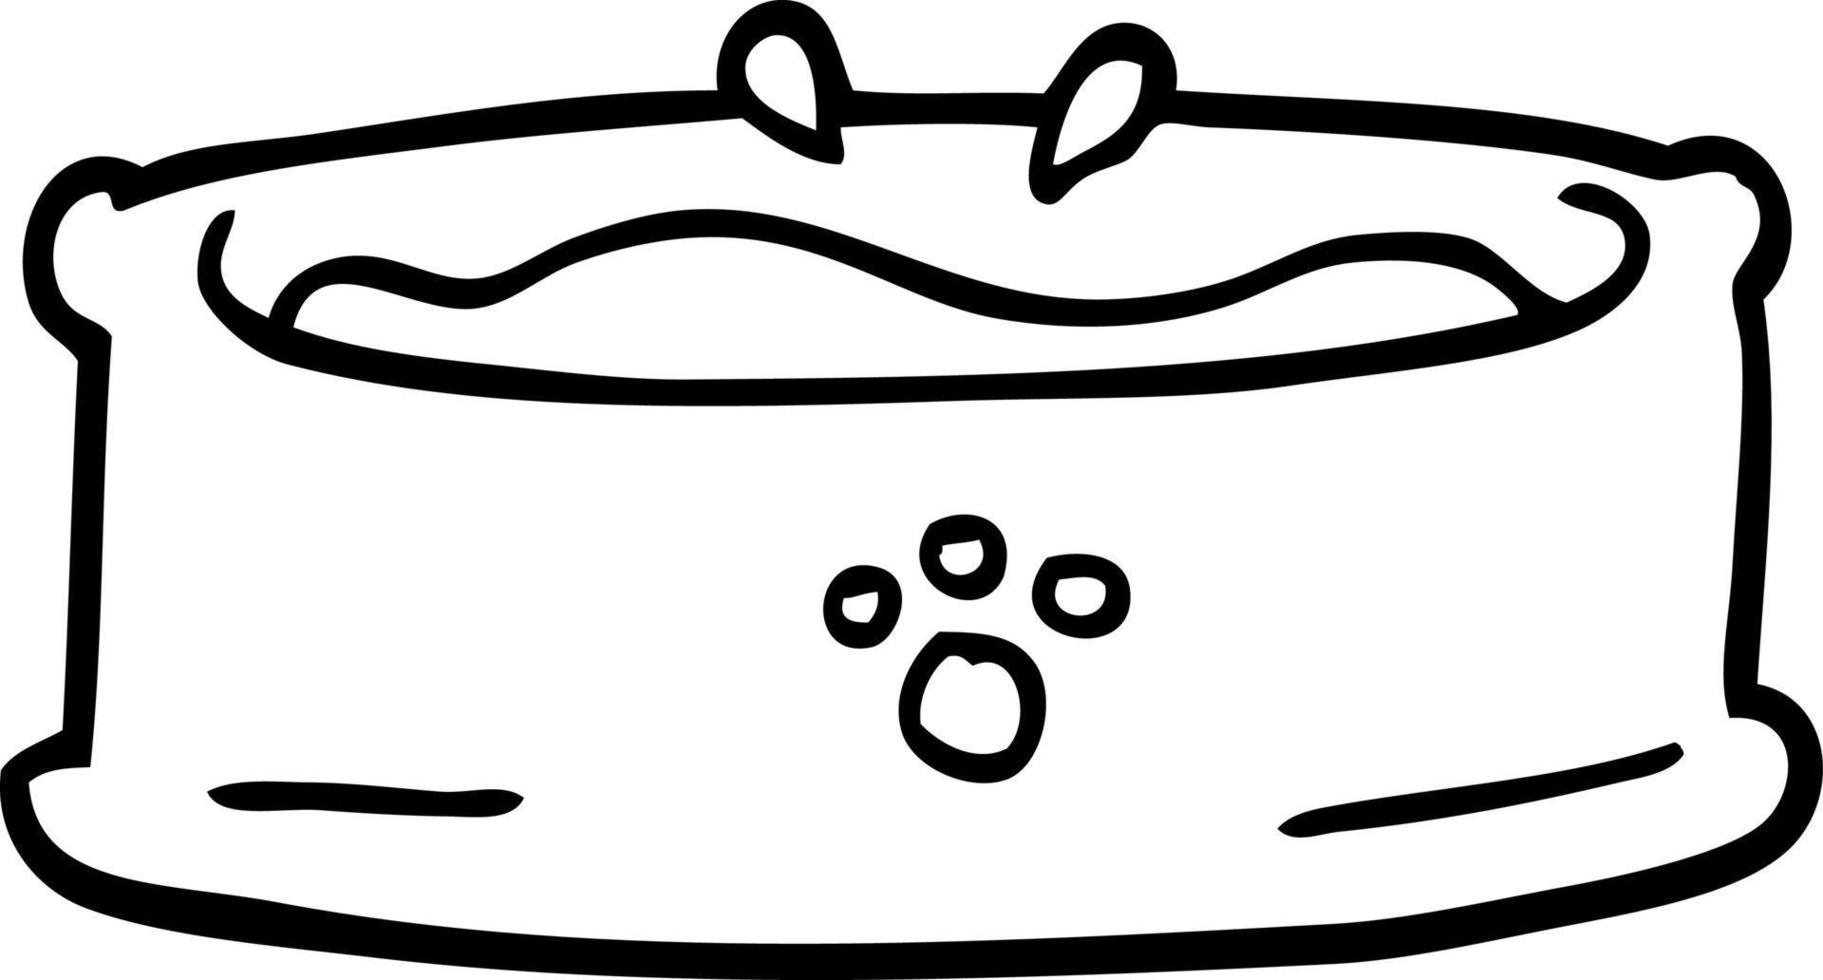 line drawing cartoon pet bowl vector